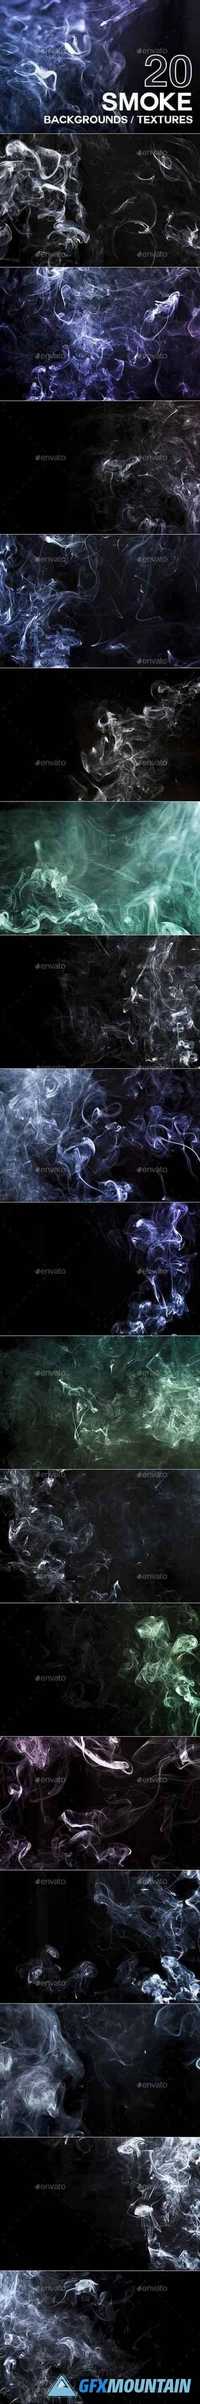 20 Smoke Backgrounds Textures 20348204